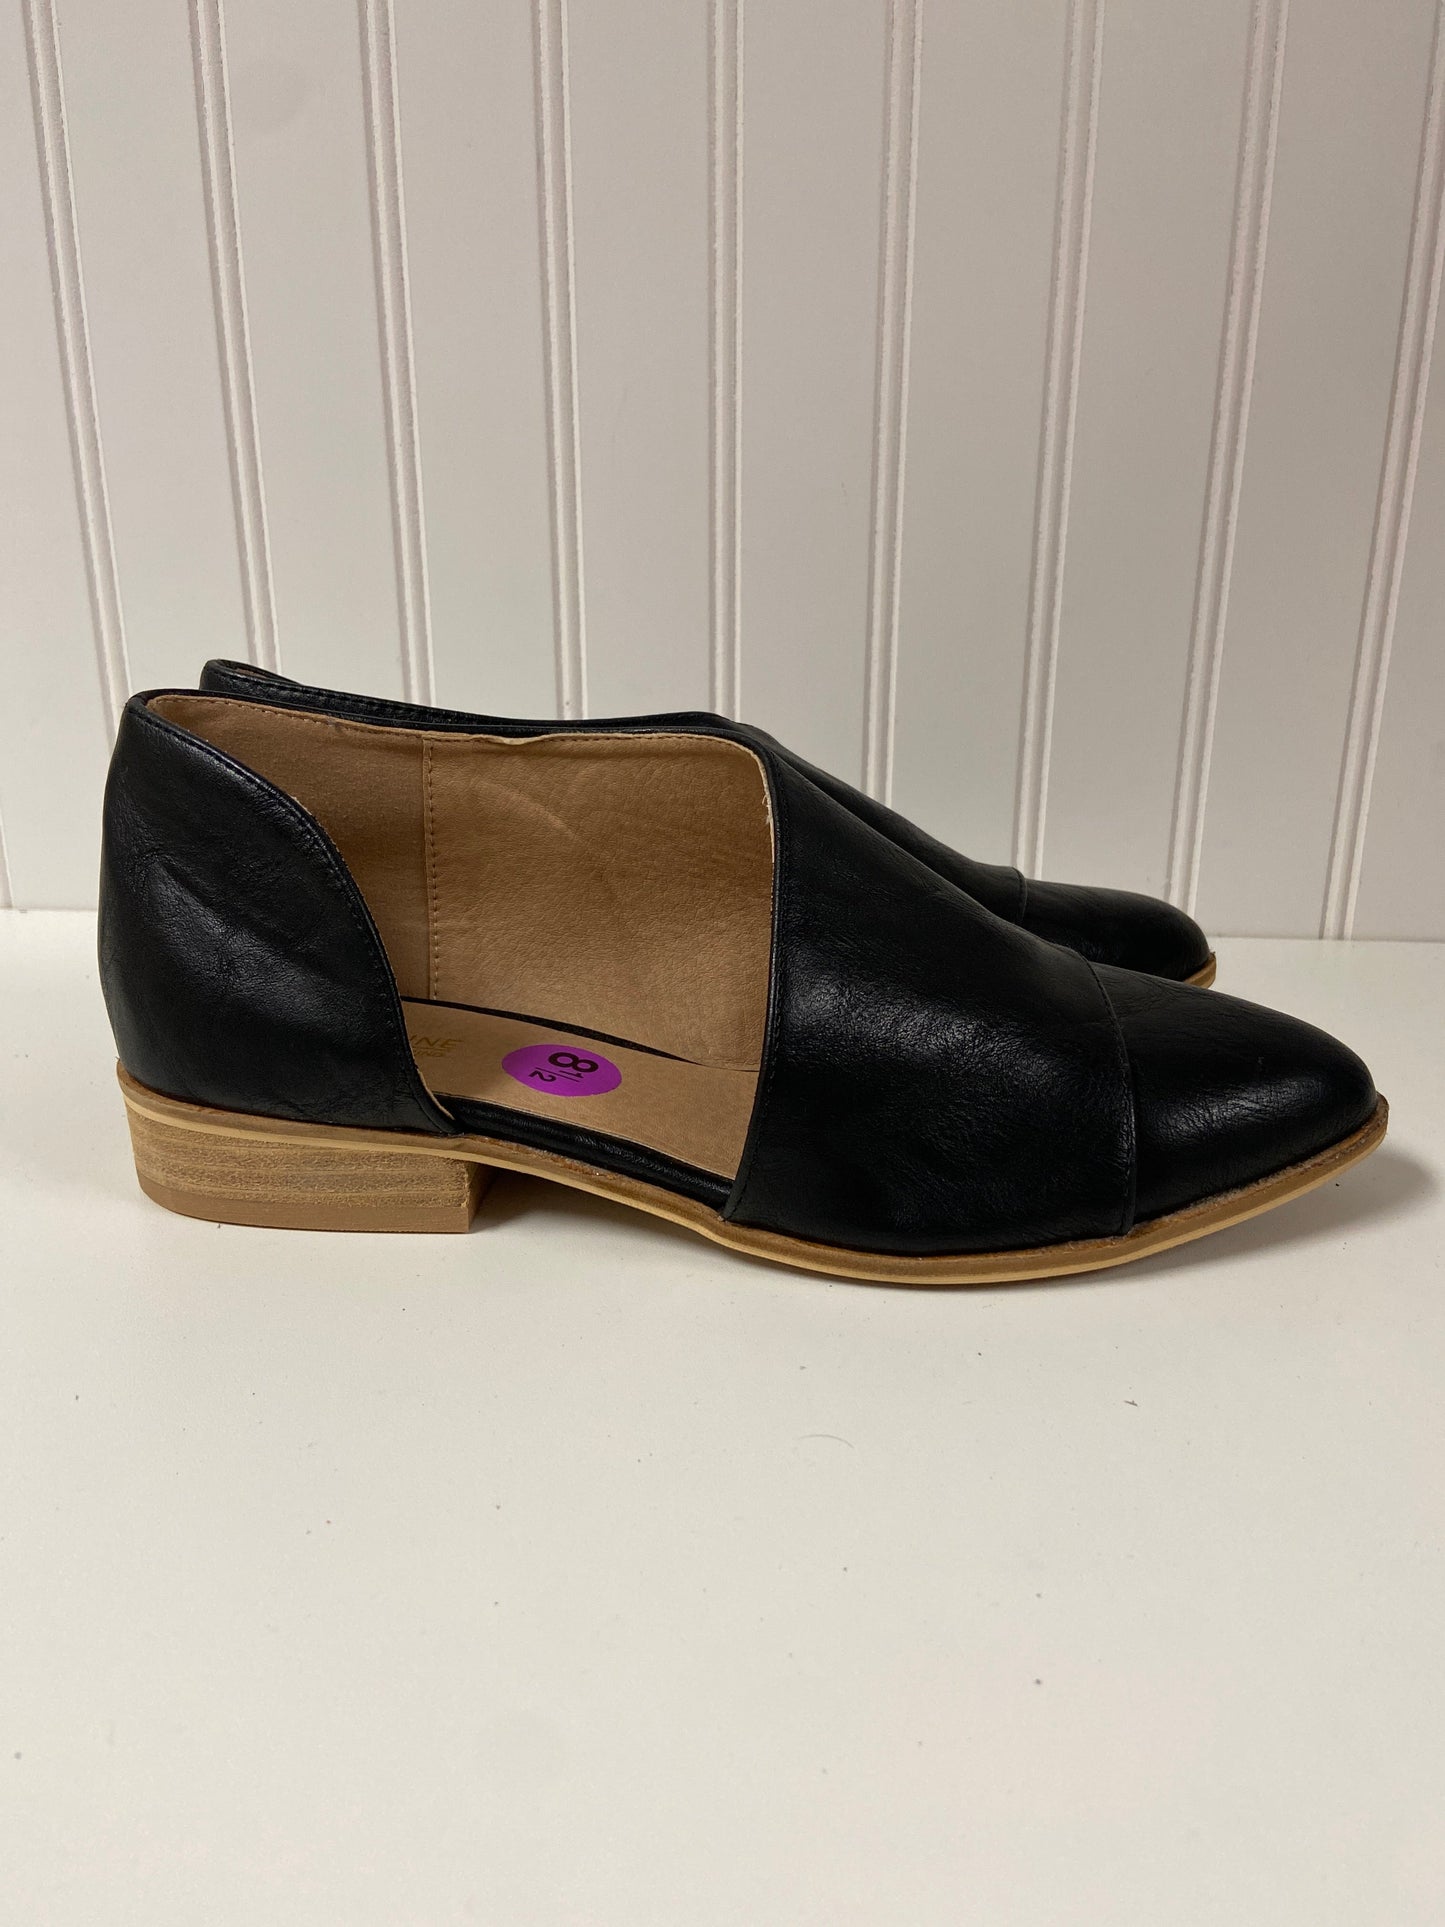 Black Shoes Flats Catherine Malandrino, Size 8.5